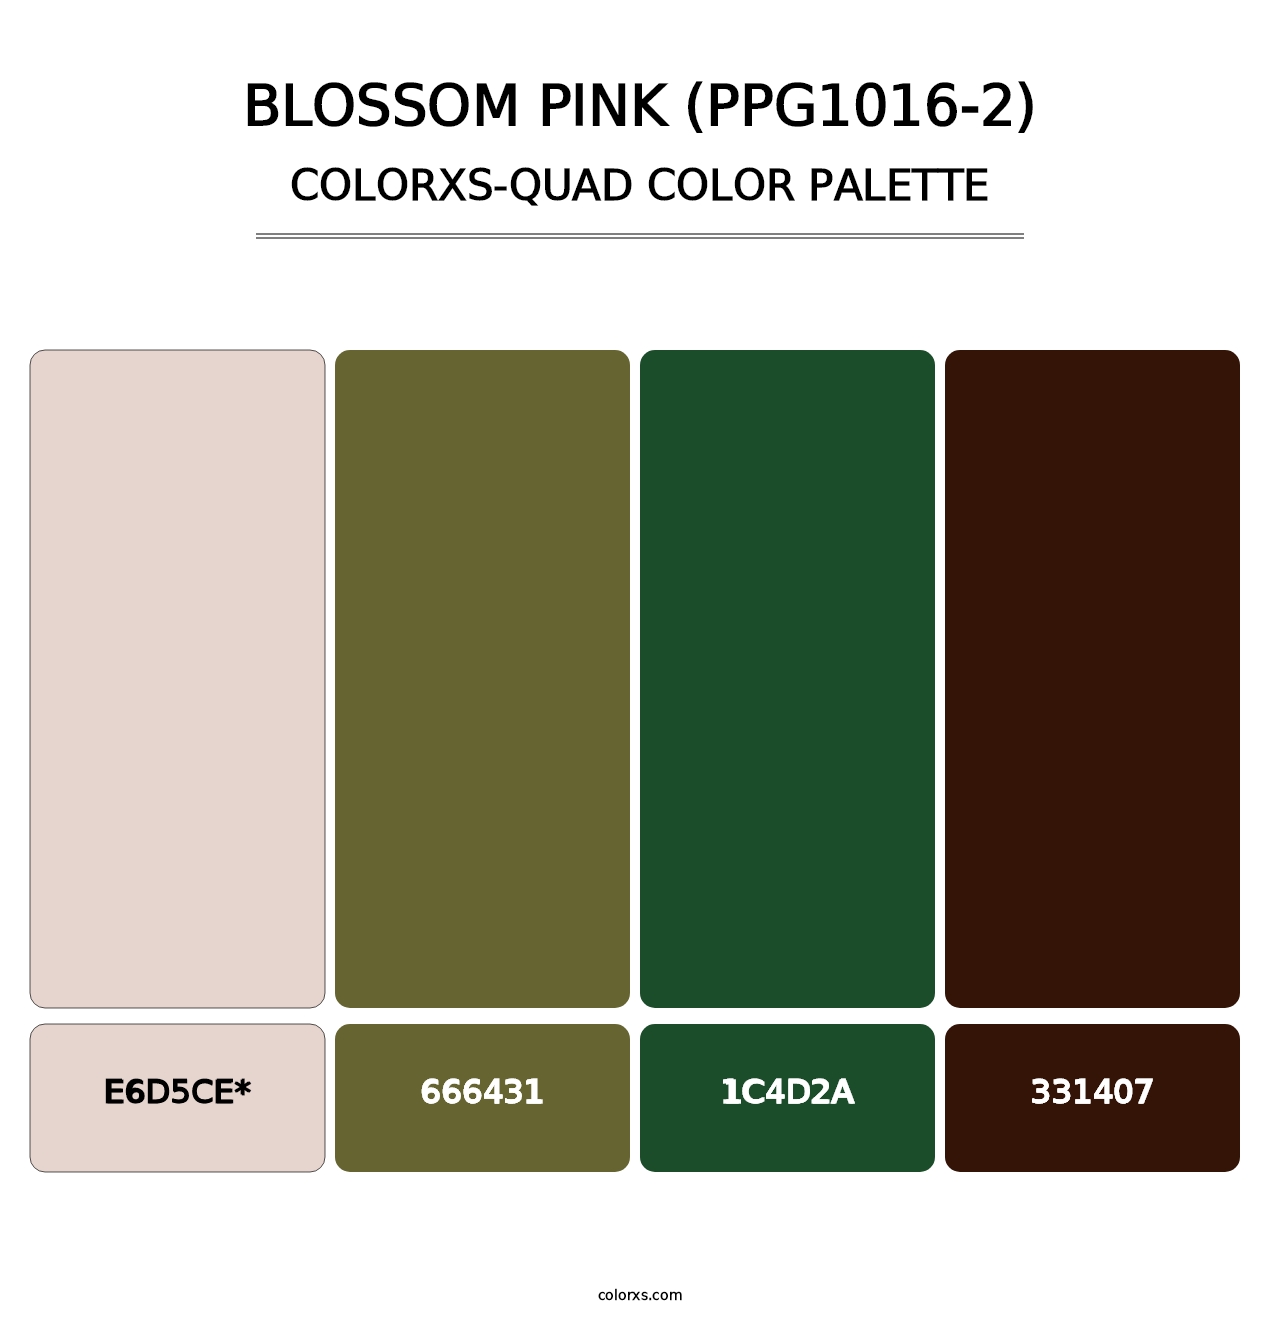 Blossom Pink (PPG1016-2) - Colorxs Quad Palette